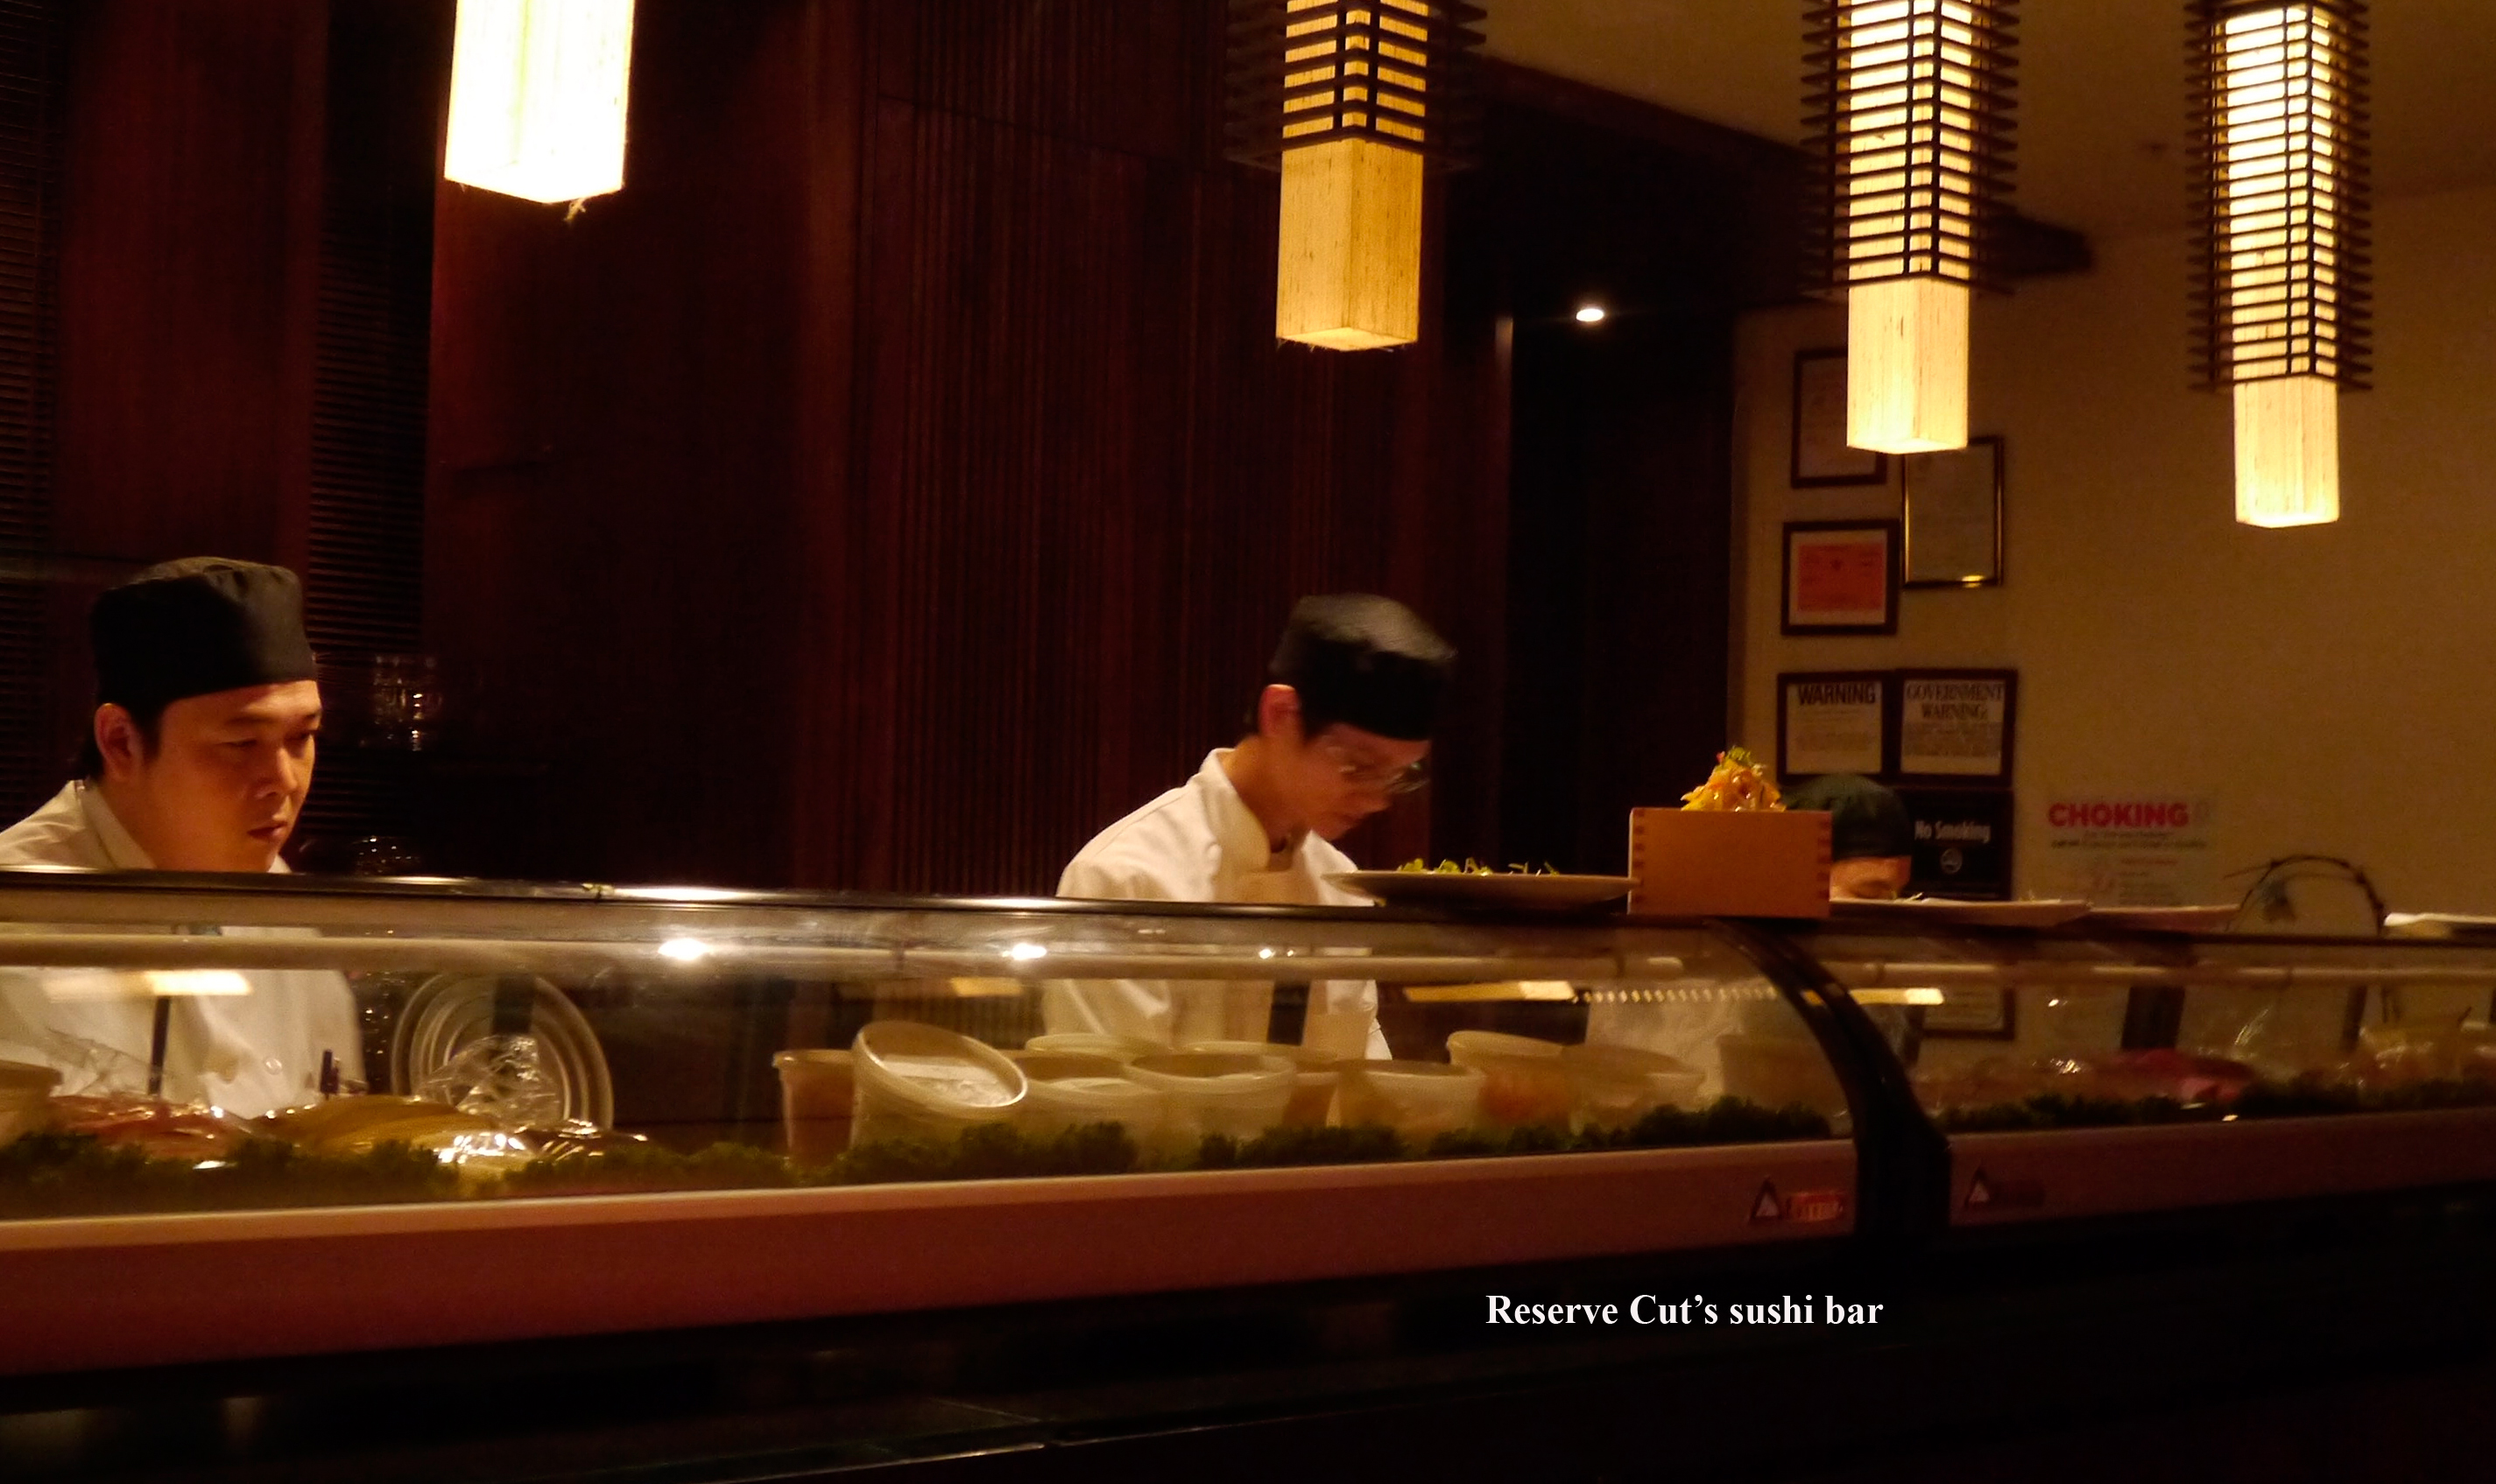 Sushi bar Reserve Cut